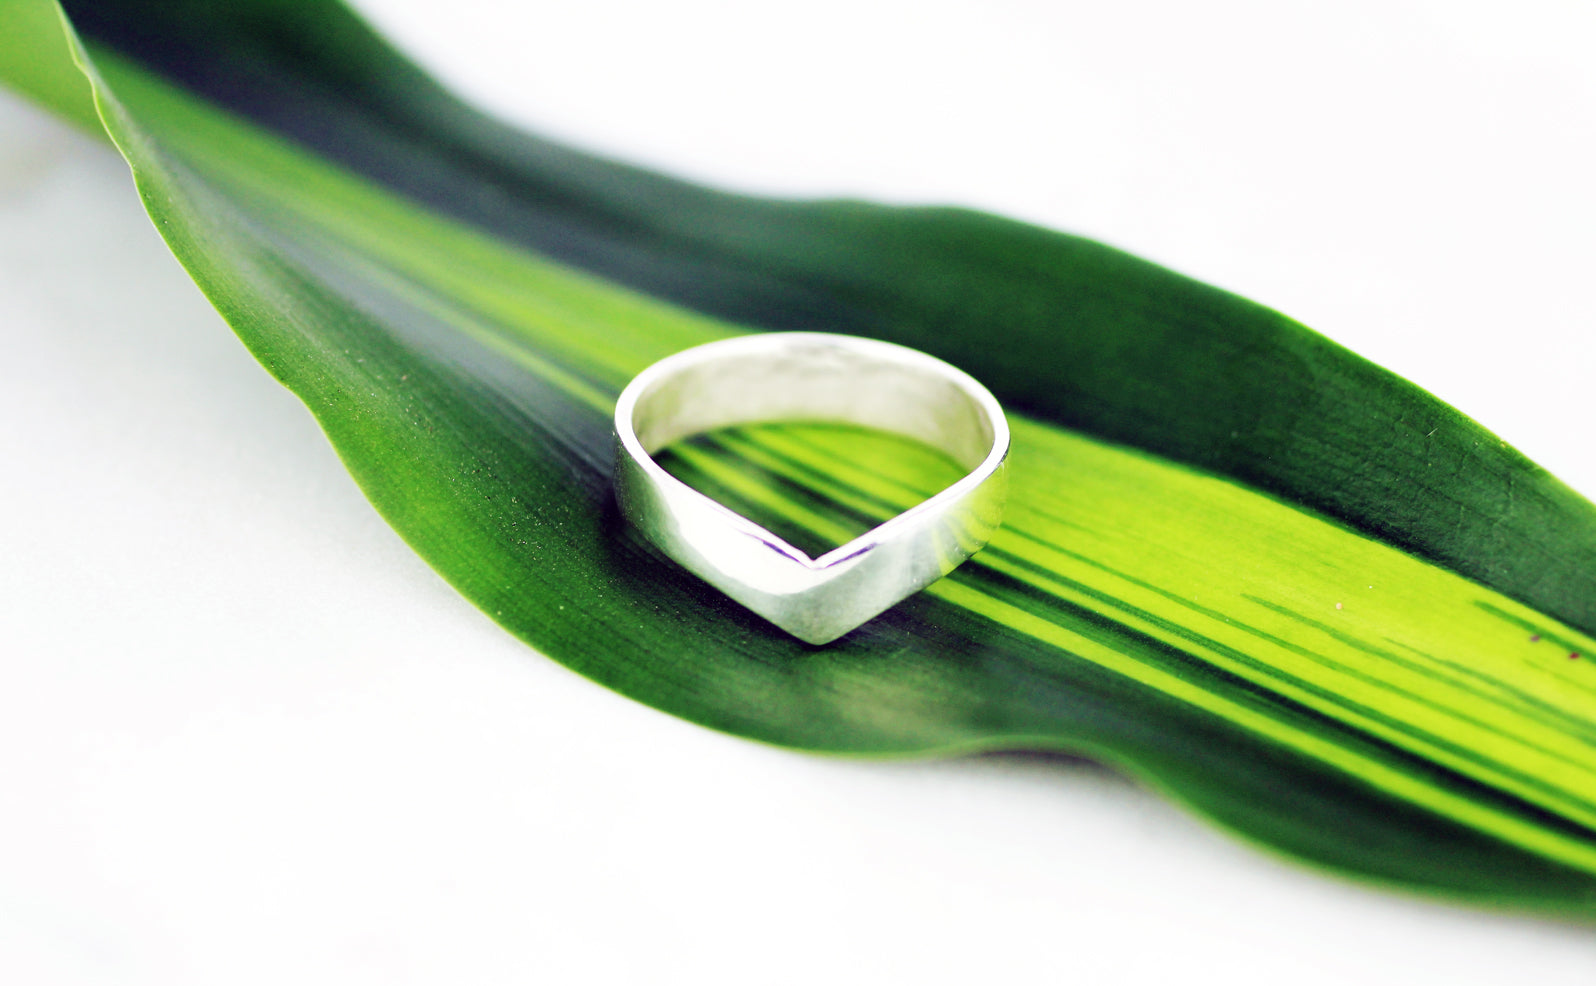 Stackable-Adelphi-v-shaped-silver-ring-by-eco-jeweller-MBG-on-leaf